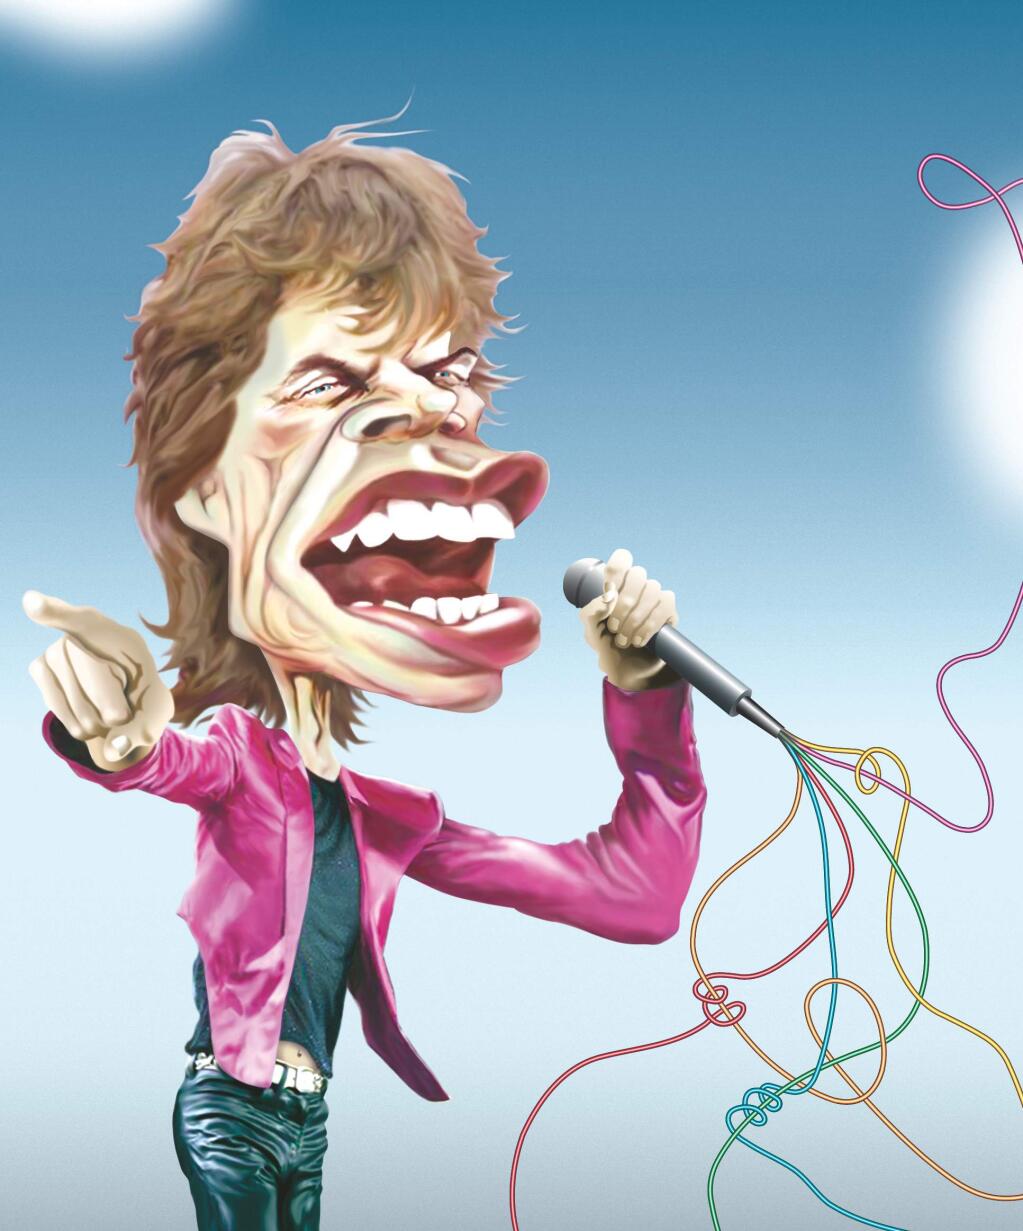 Mick Jagger caricature by Loren Doppenberg, staff artist, The Press Democrat, Santa Rosa, California